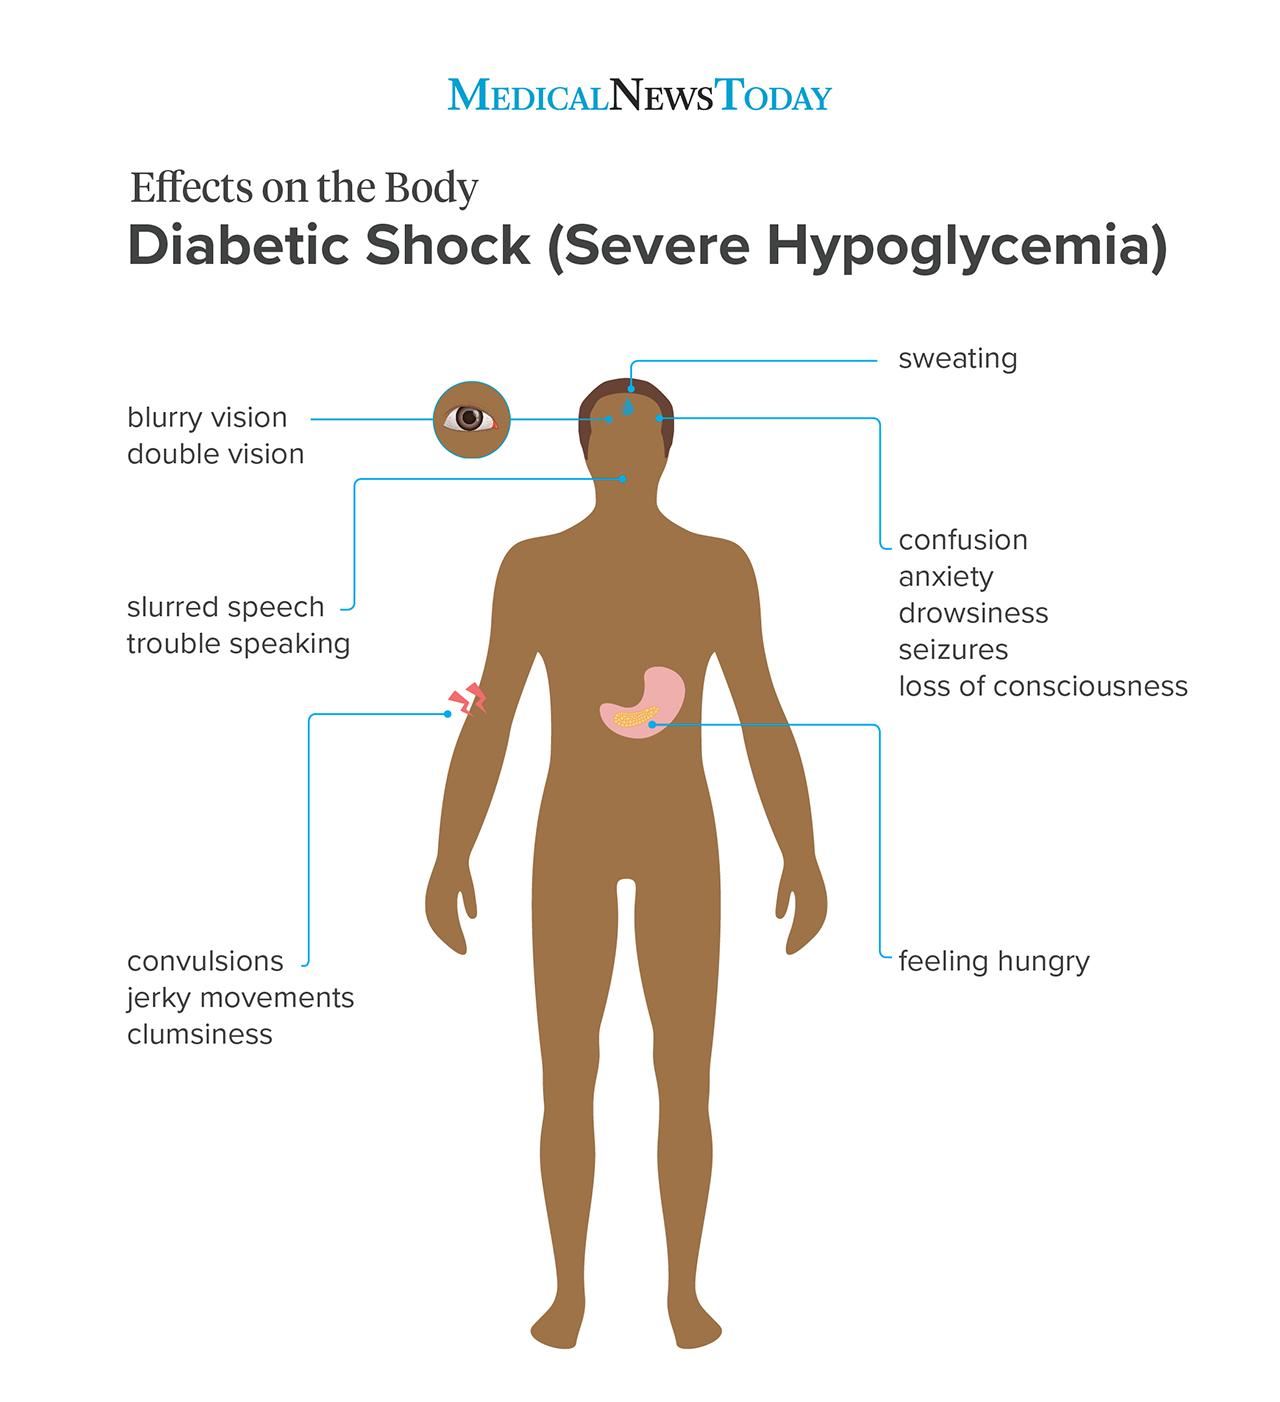 Diabetic shock: Symptoms, complications, and treatment